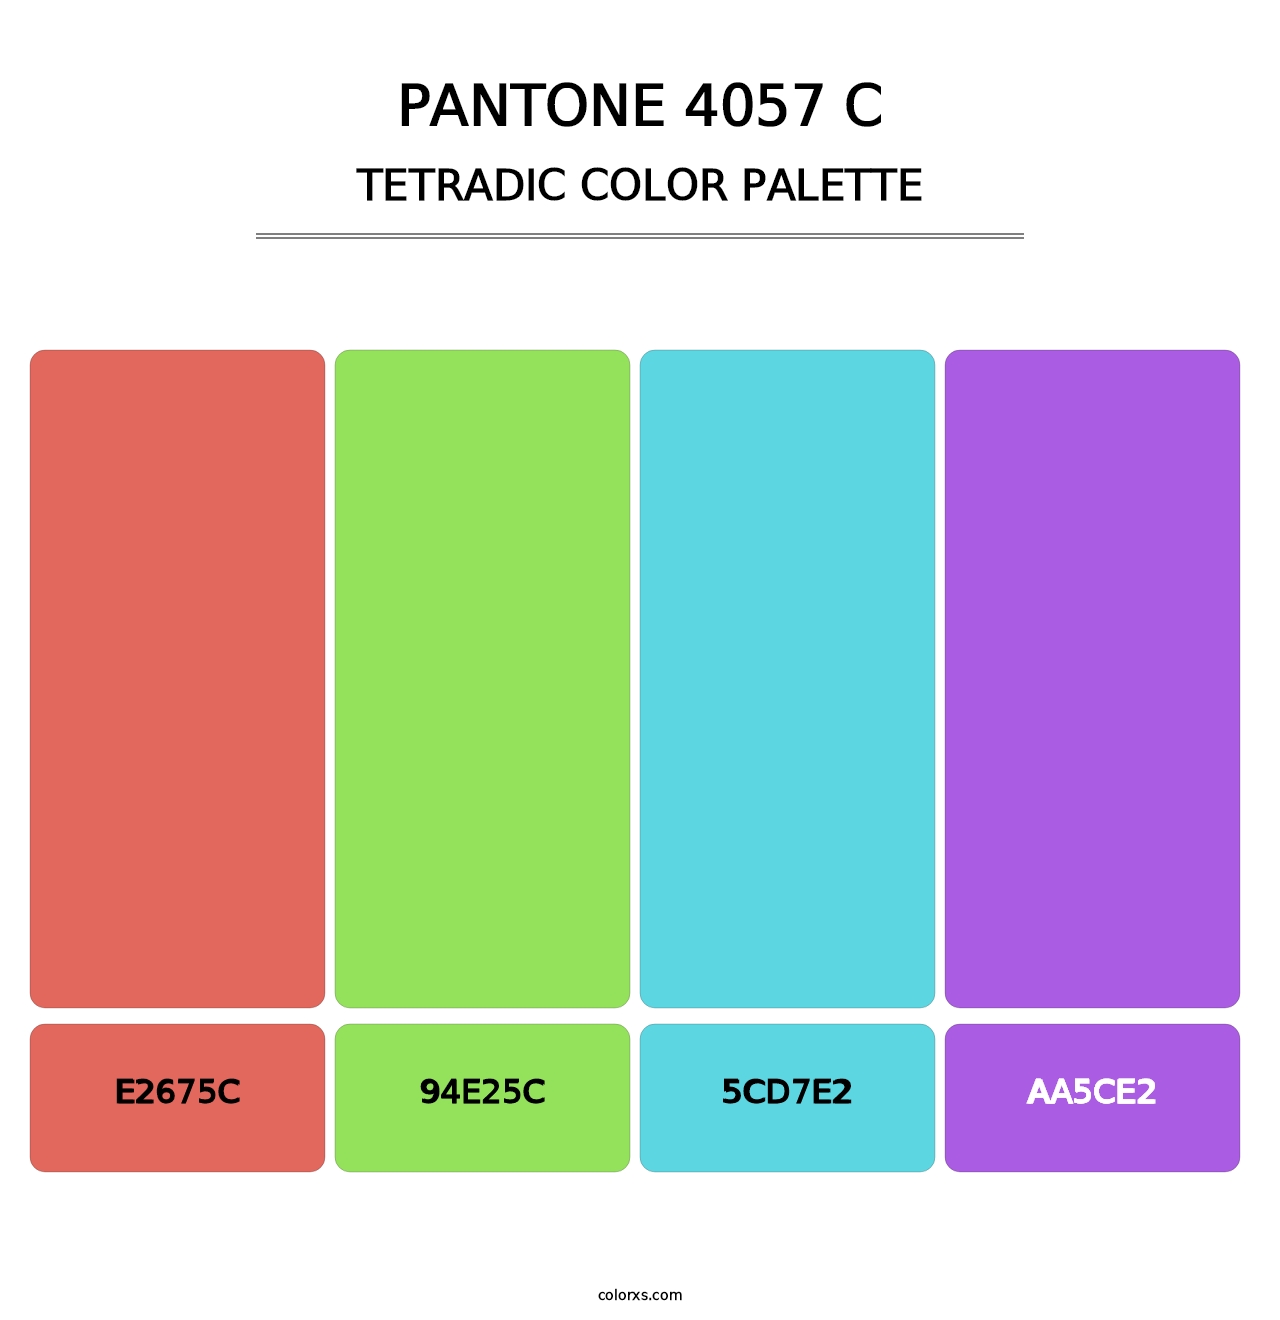 PANTONE 4057 C - Tetradic Color Palette